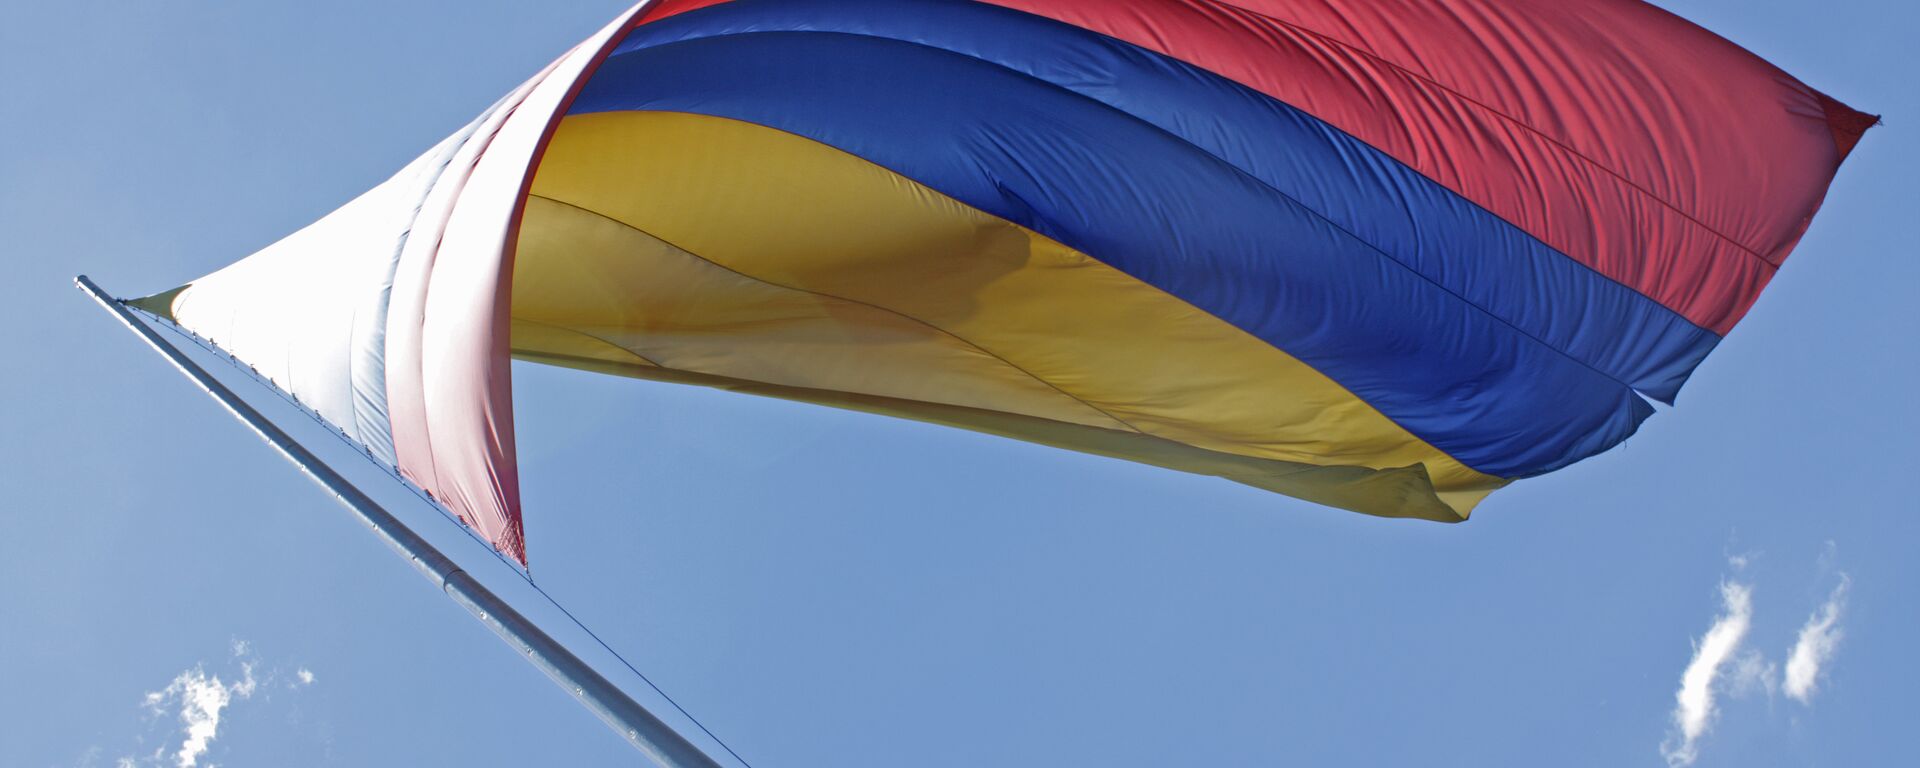 Bandera de Colombia - Sputnik Mundo, 1920, 14.05.2021